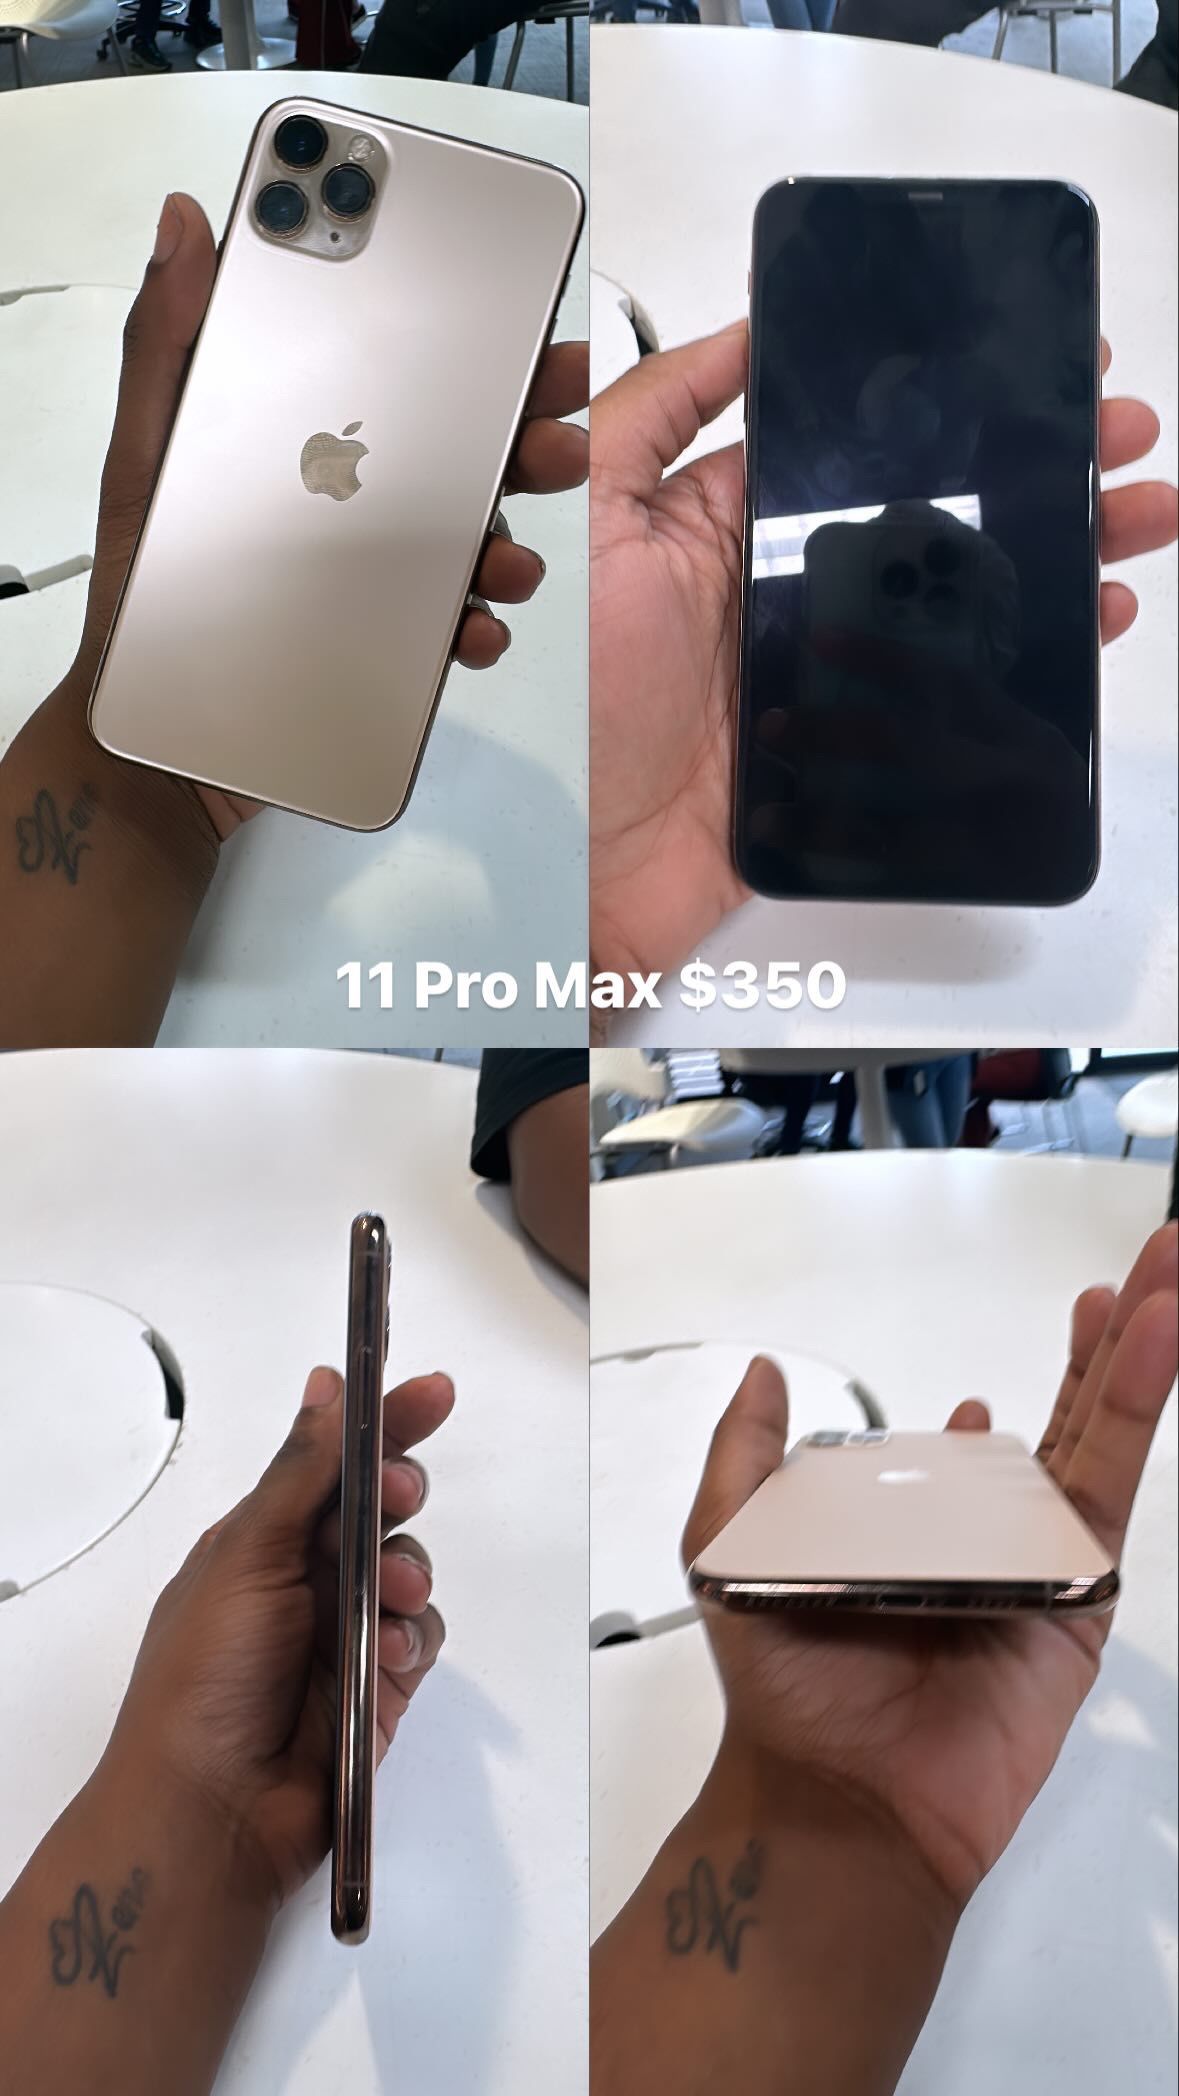 iPhone 11 Pro Max unlocked 